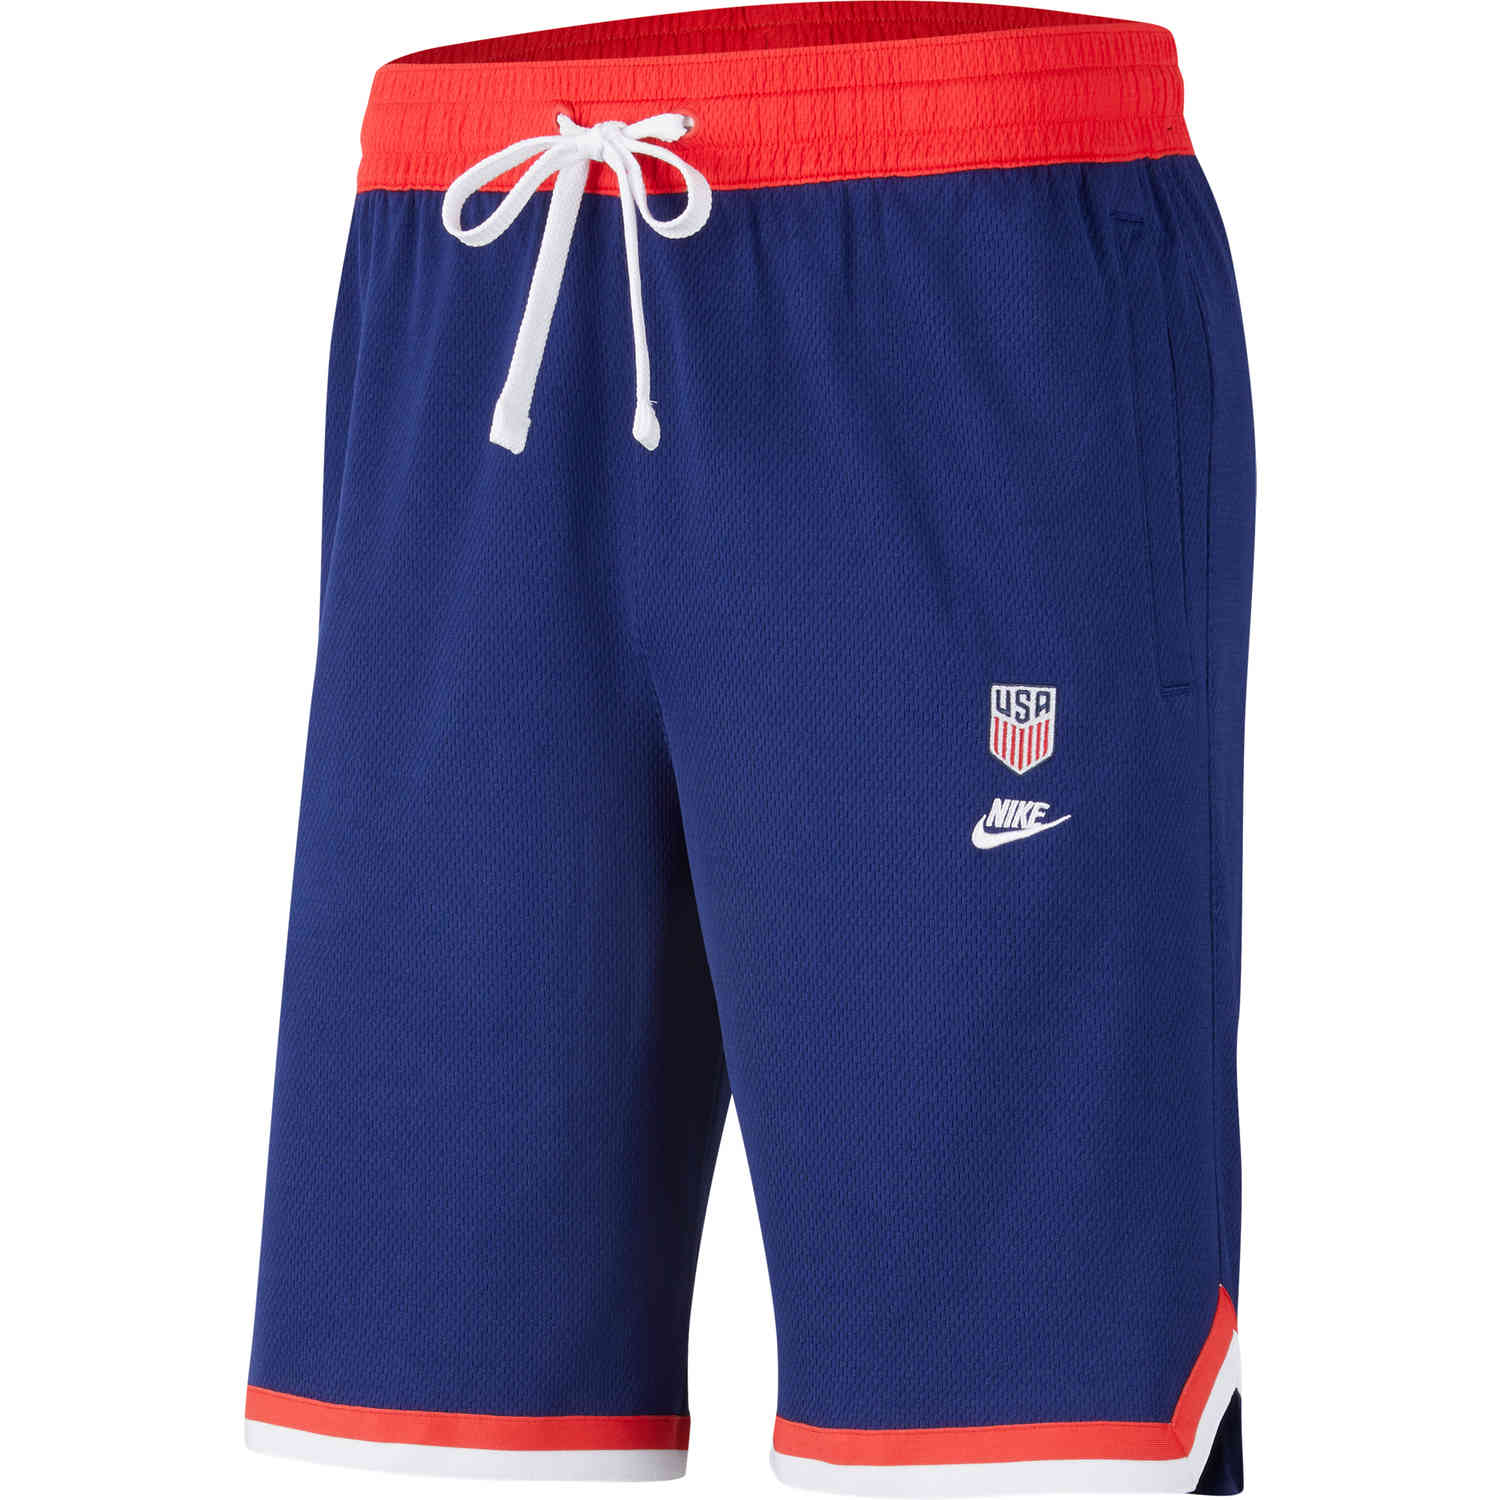 Nike USA DNA Shorts - Loyal Blue 